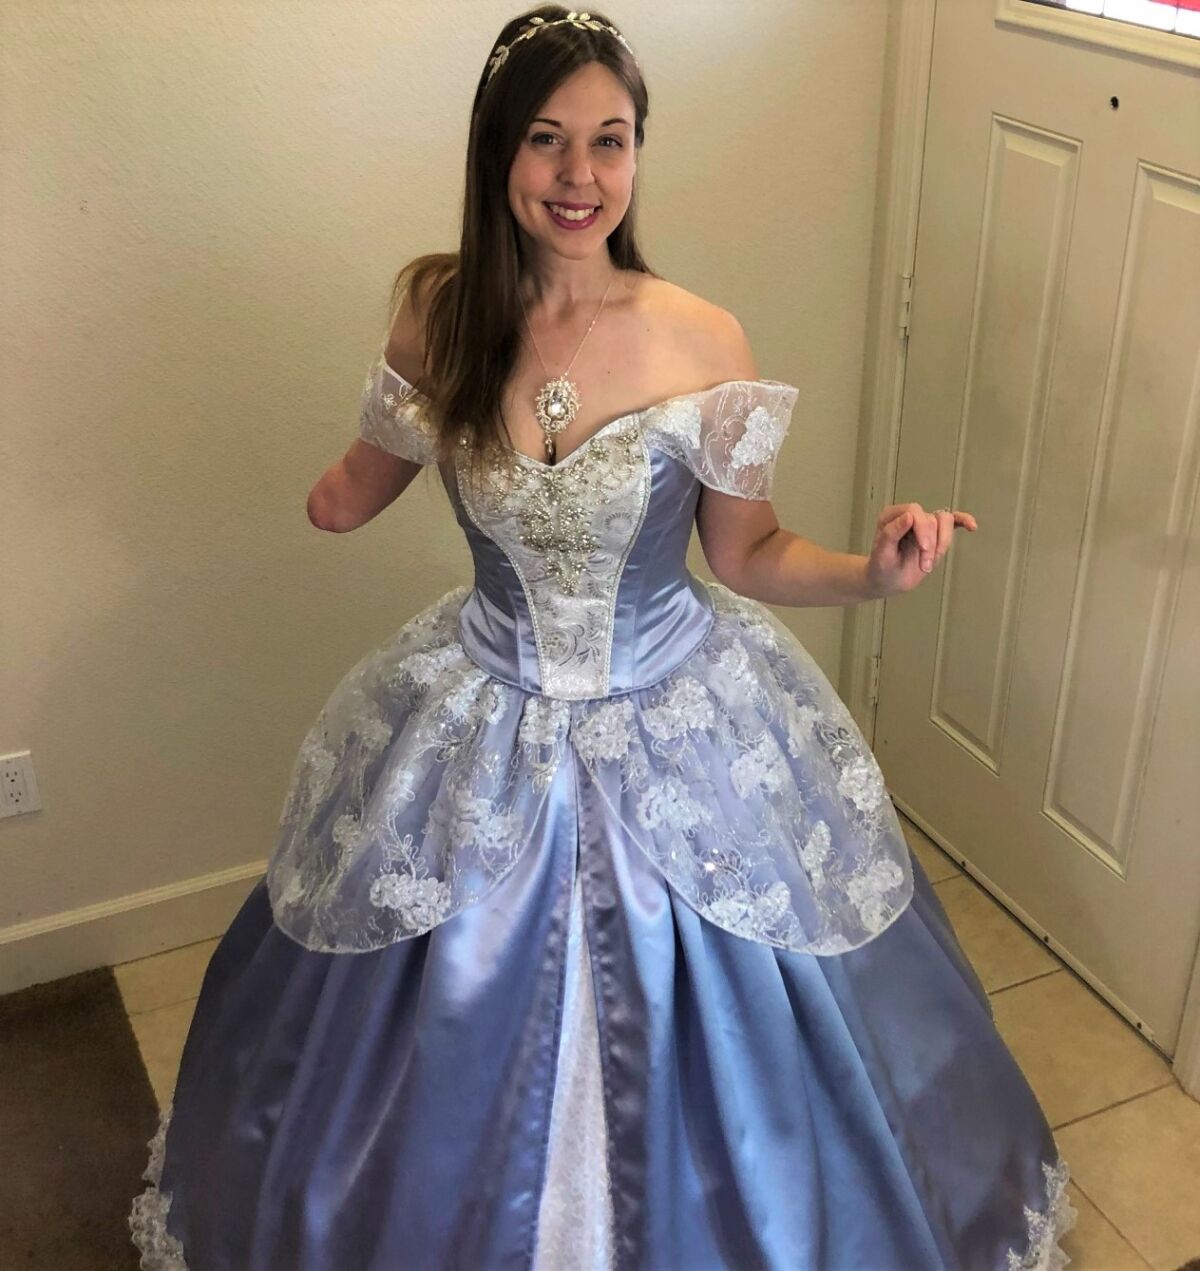 Mandy Pursley's Cinderella costume minus her "glass" prosthesis that won Comic-Con 2020 Judges' Choice.